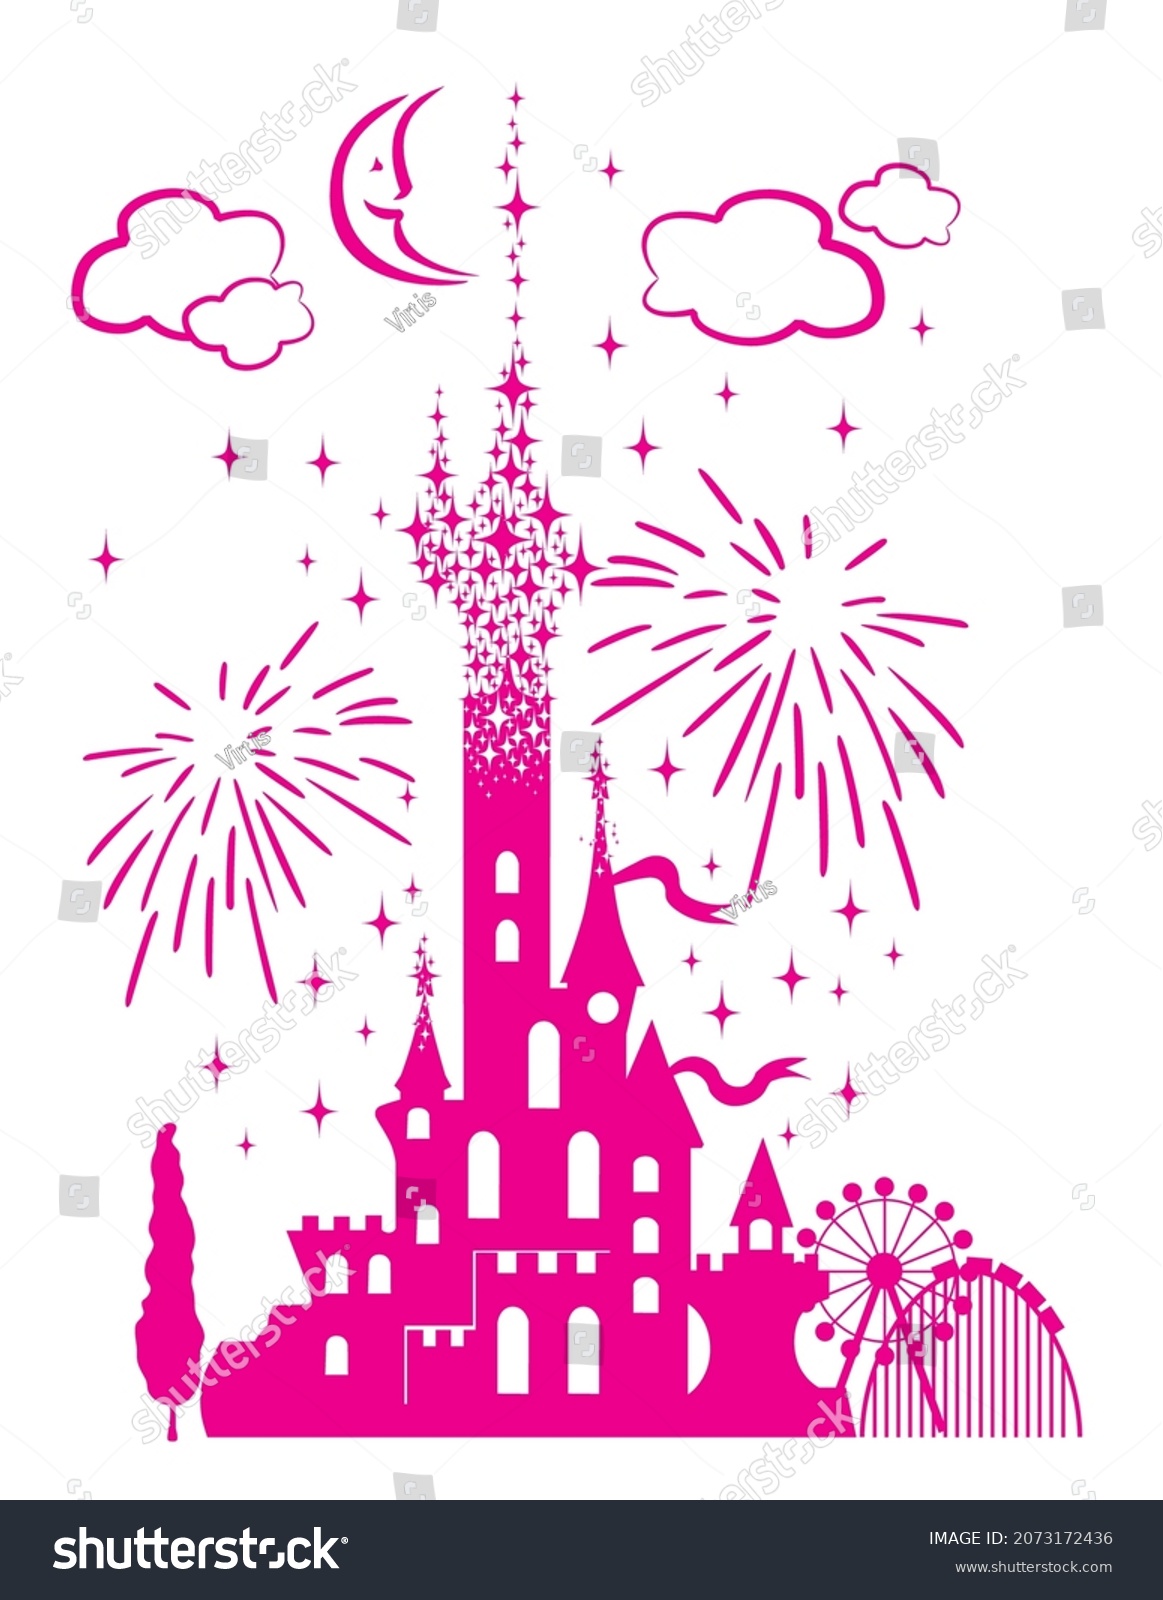 SVG of childrens fairytale entertainment castle icon svg